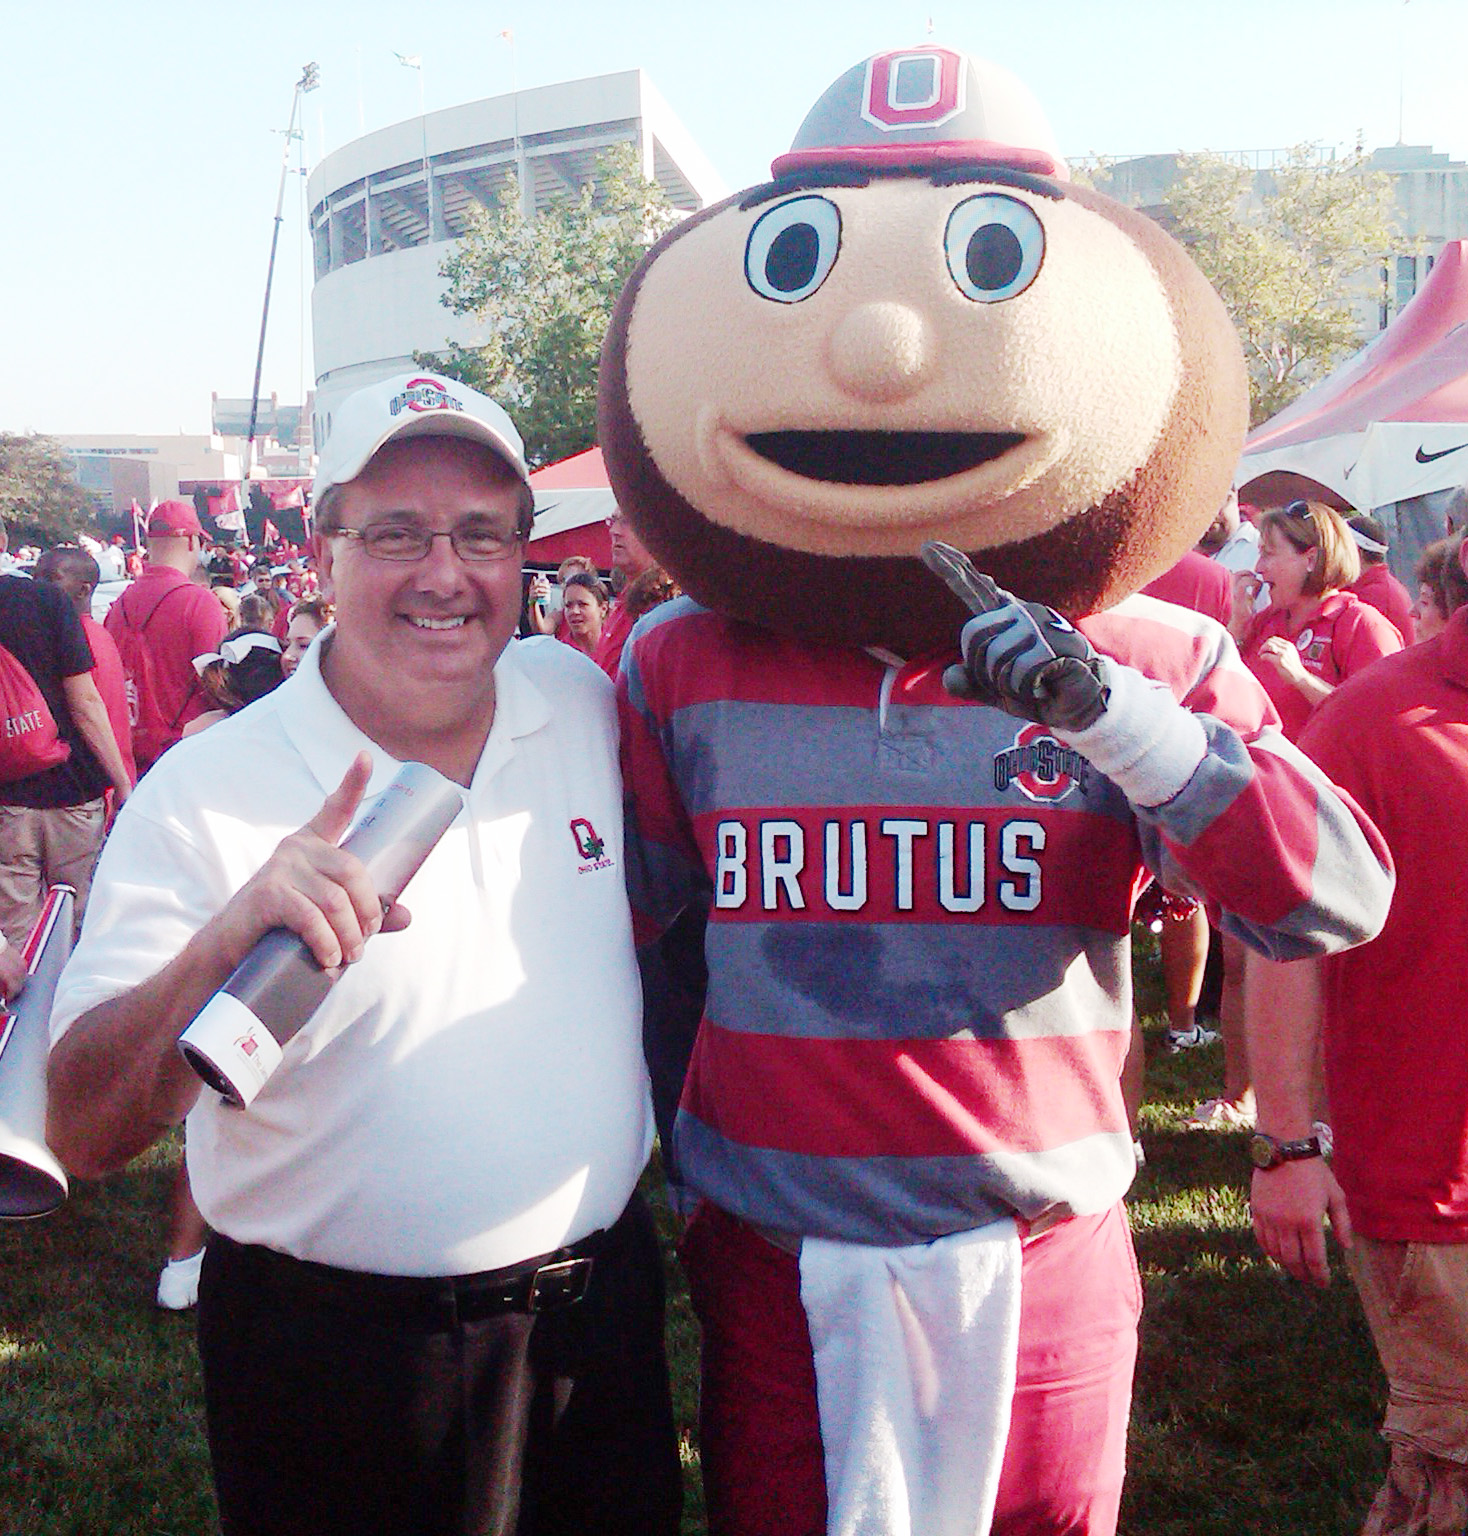 Dr Milewski and Brutus